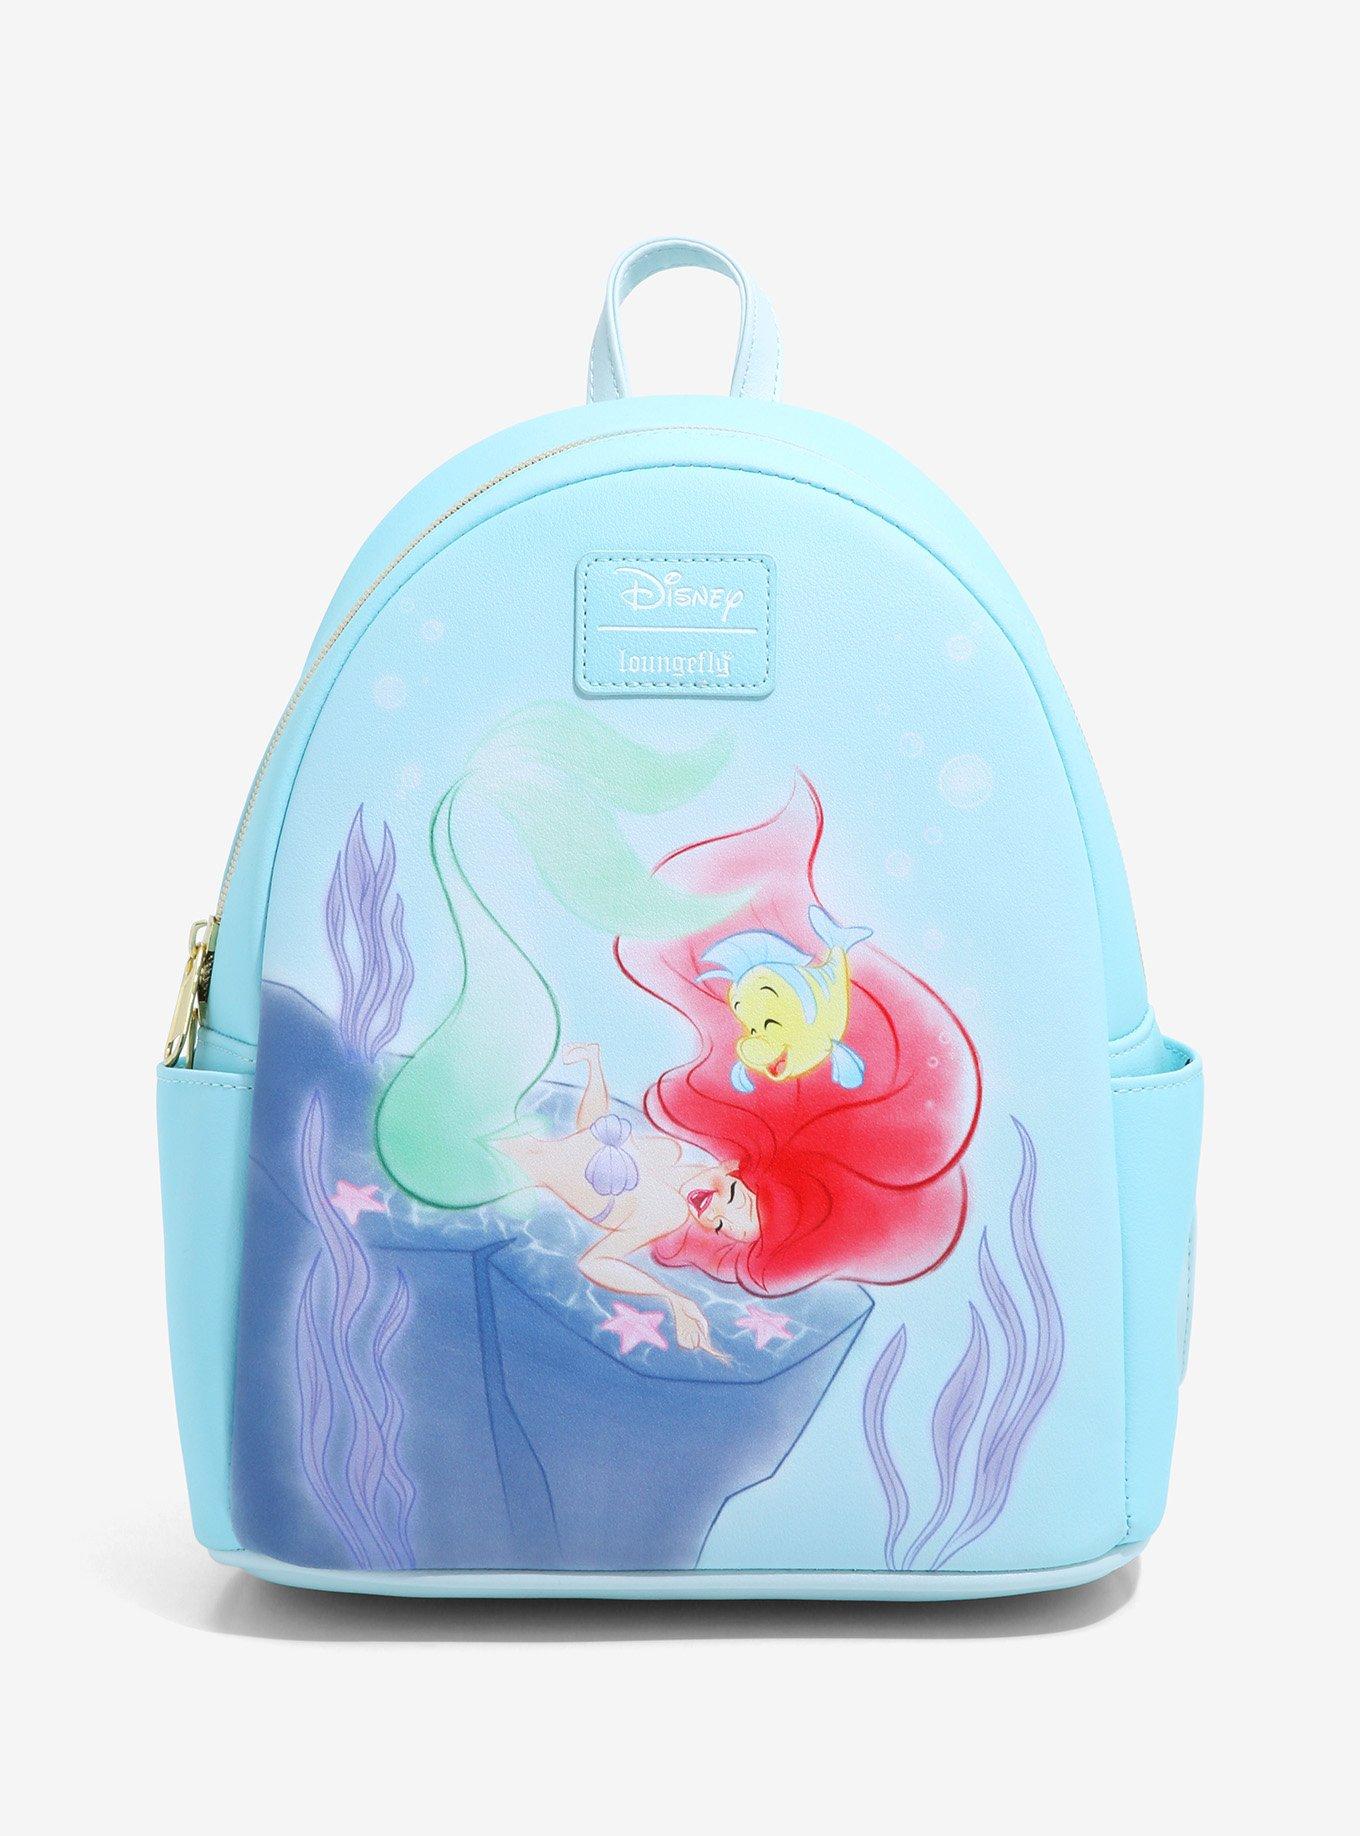 My new Little Mermaid Bag : r/Loungefly